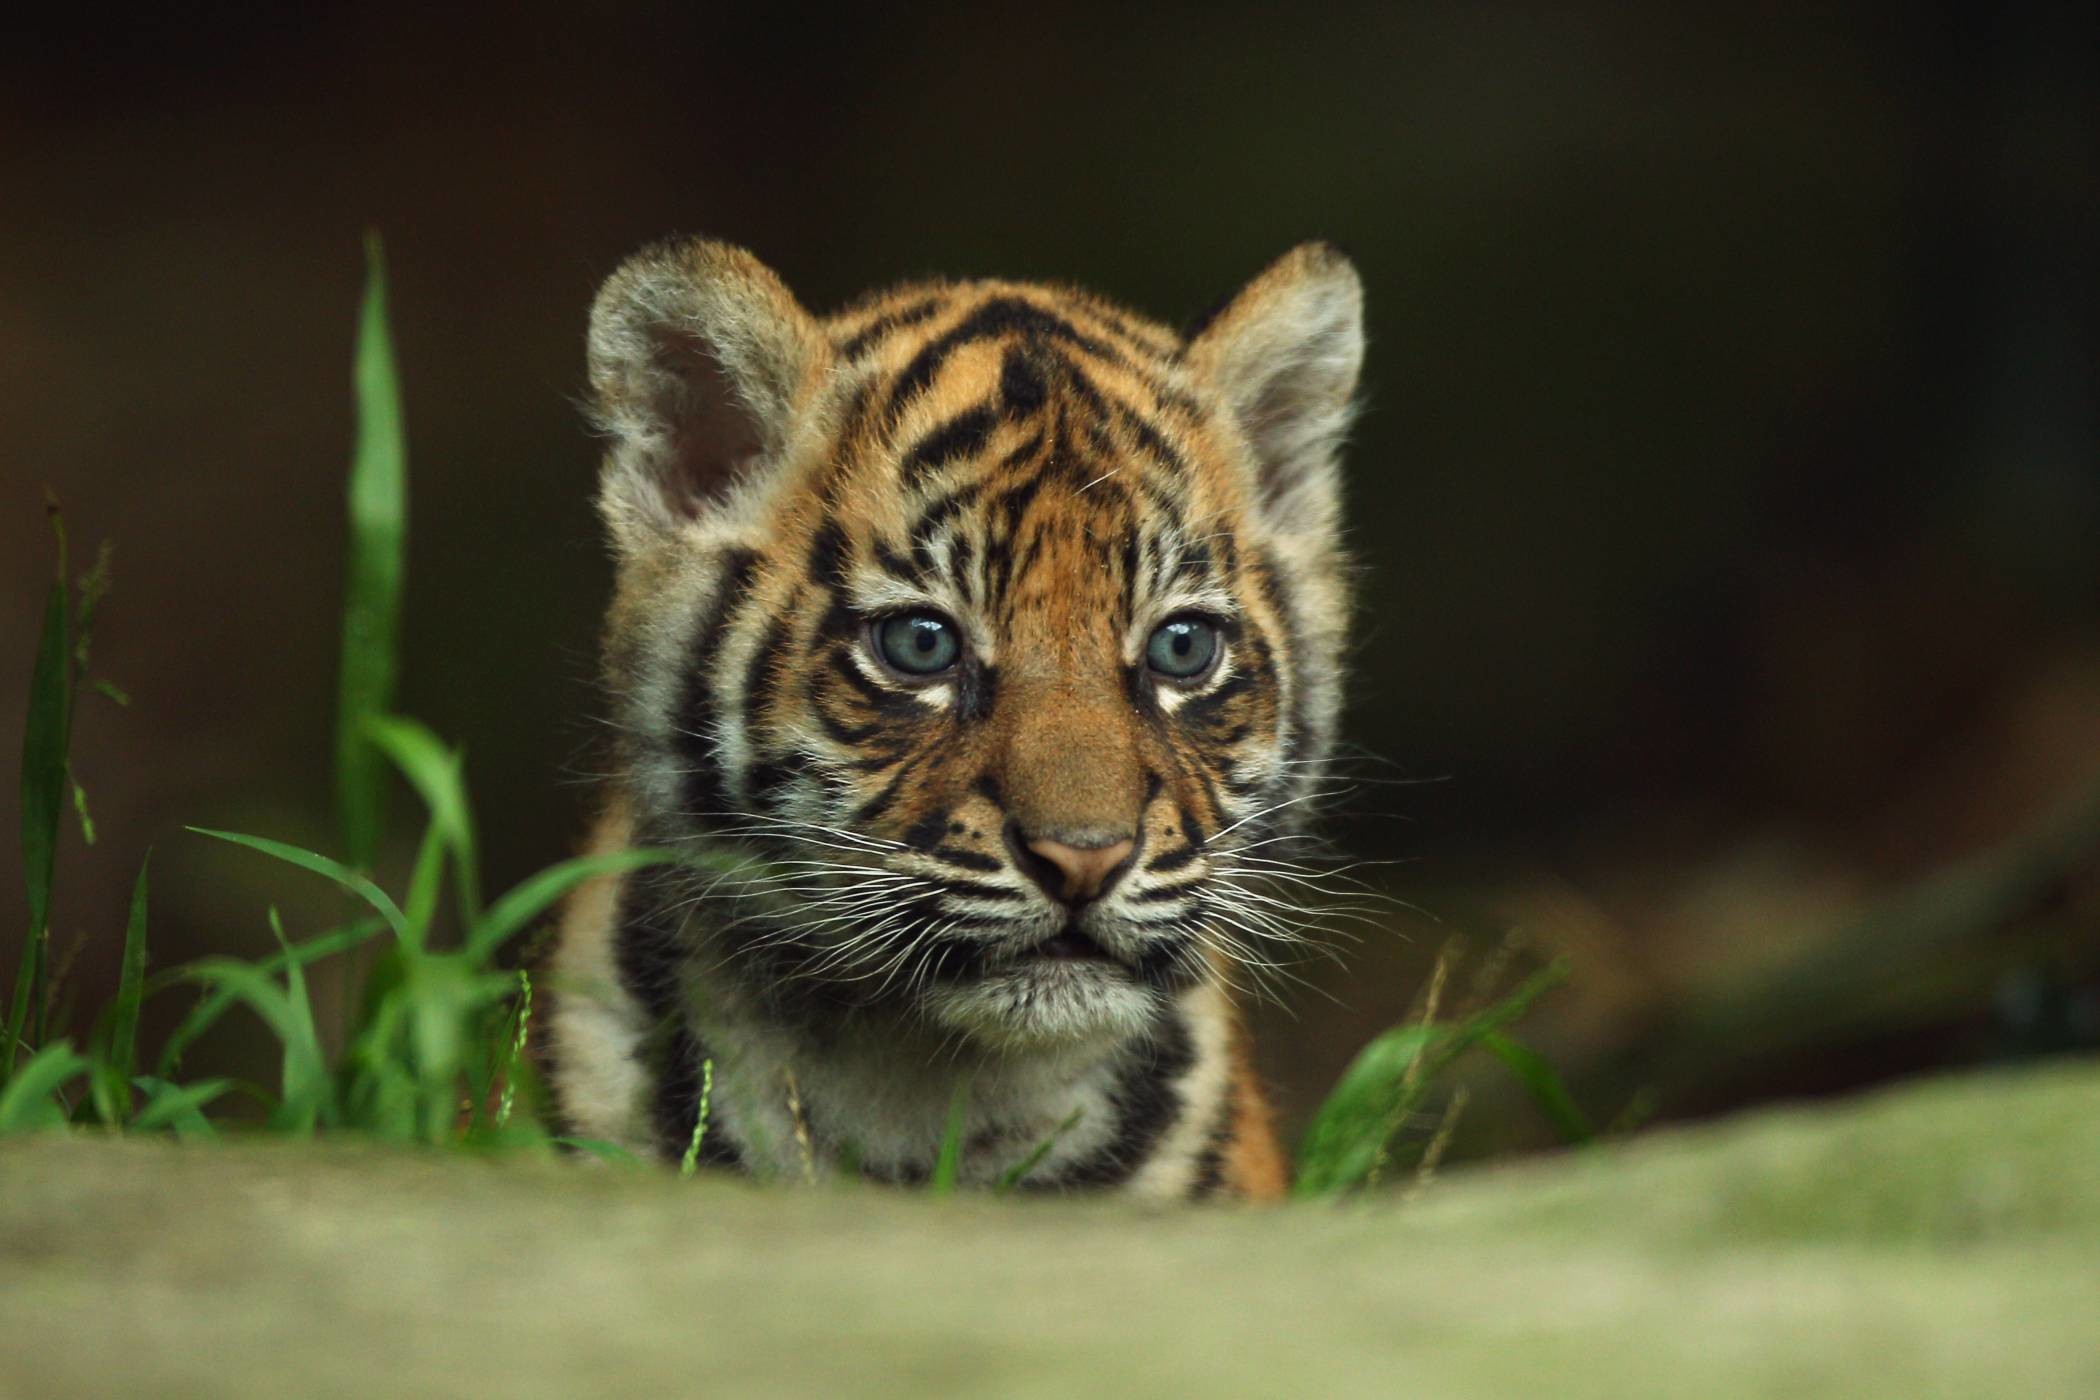 Download wallpaper 1772x2402 tiger cub art cute sight hd background